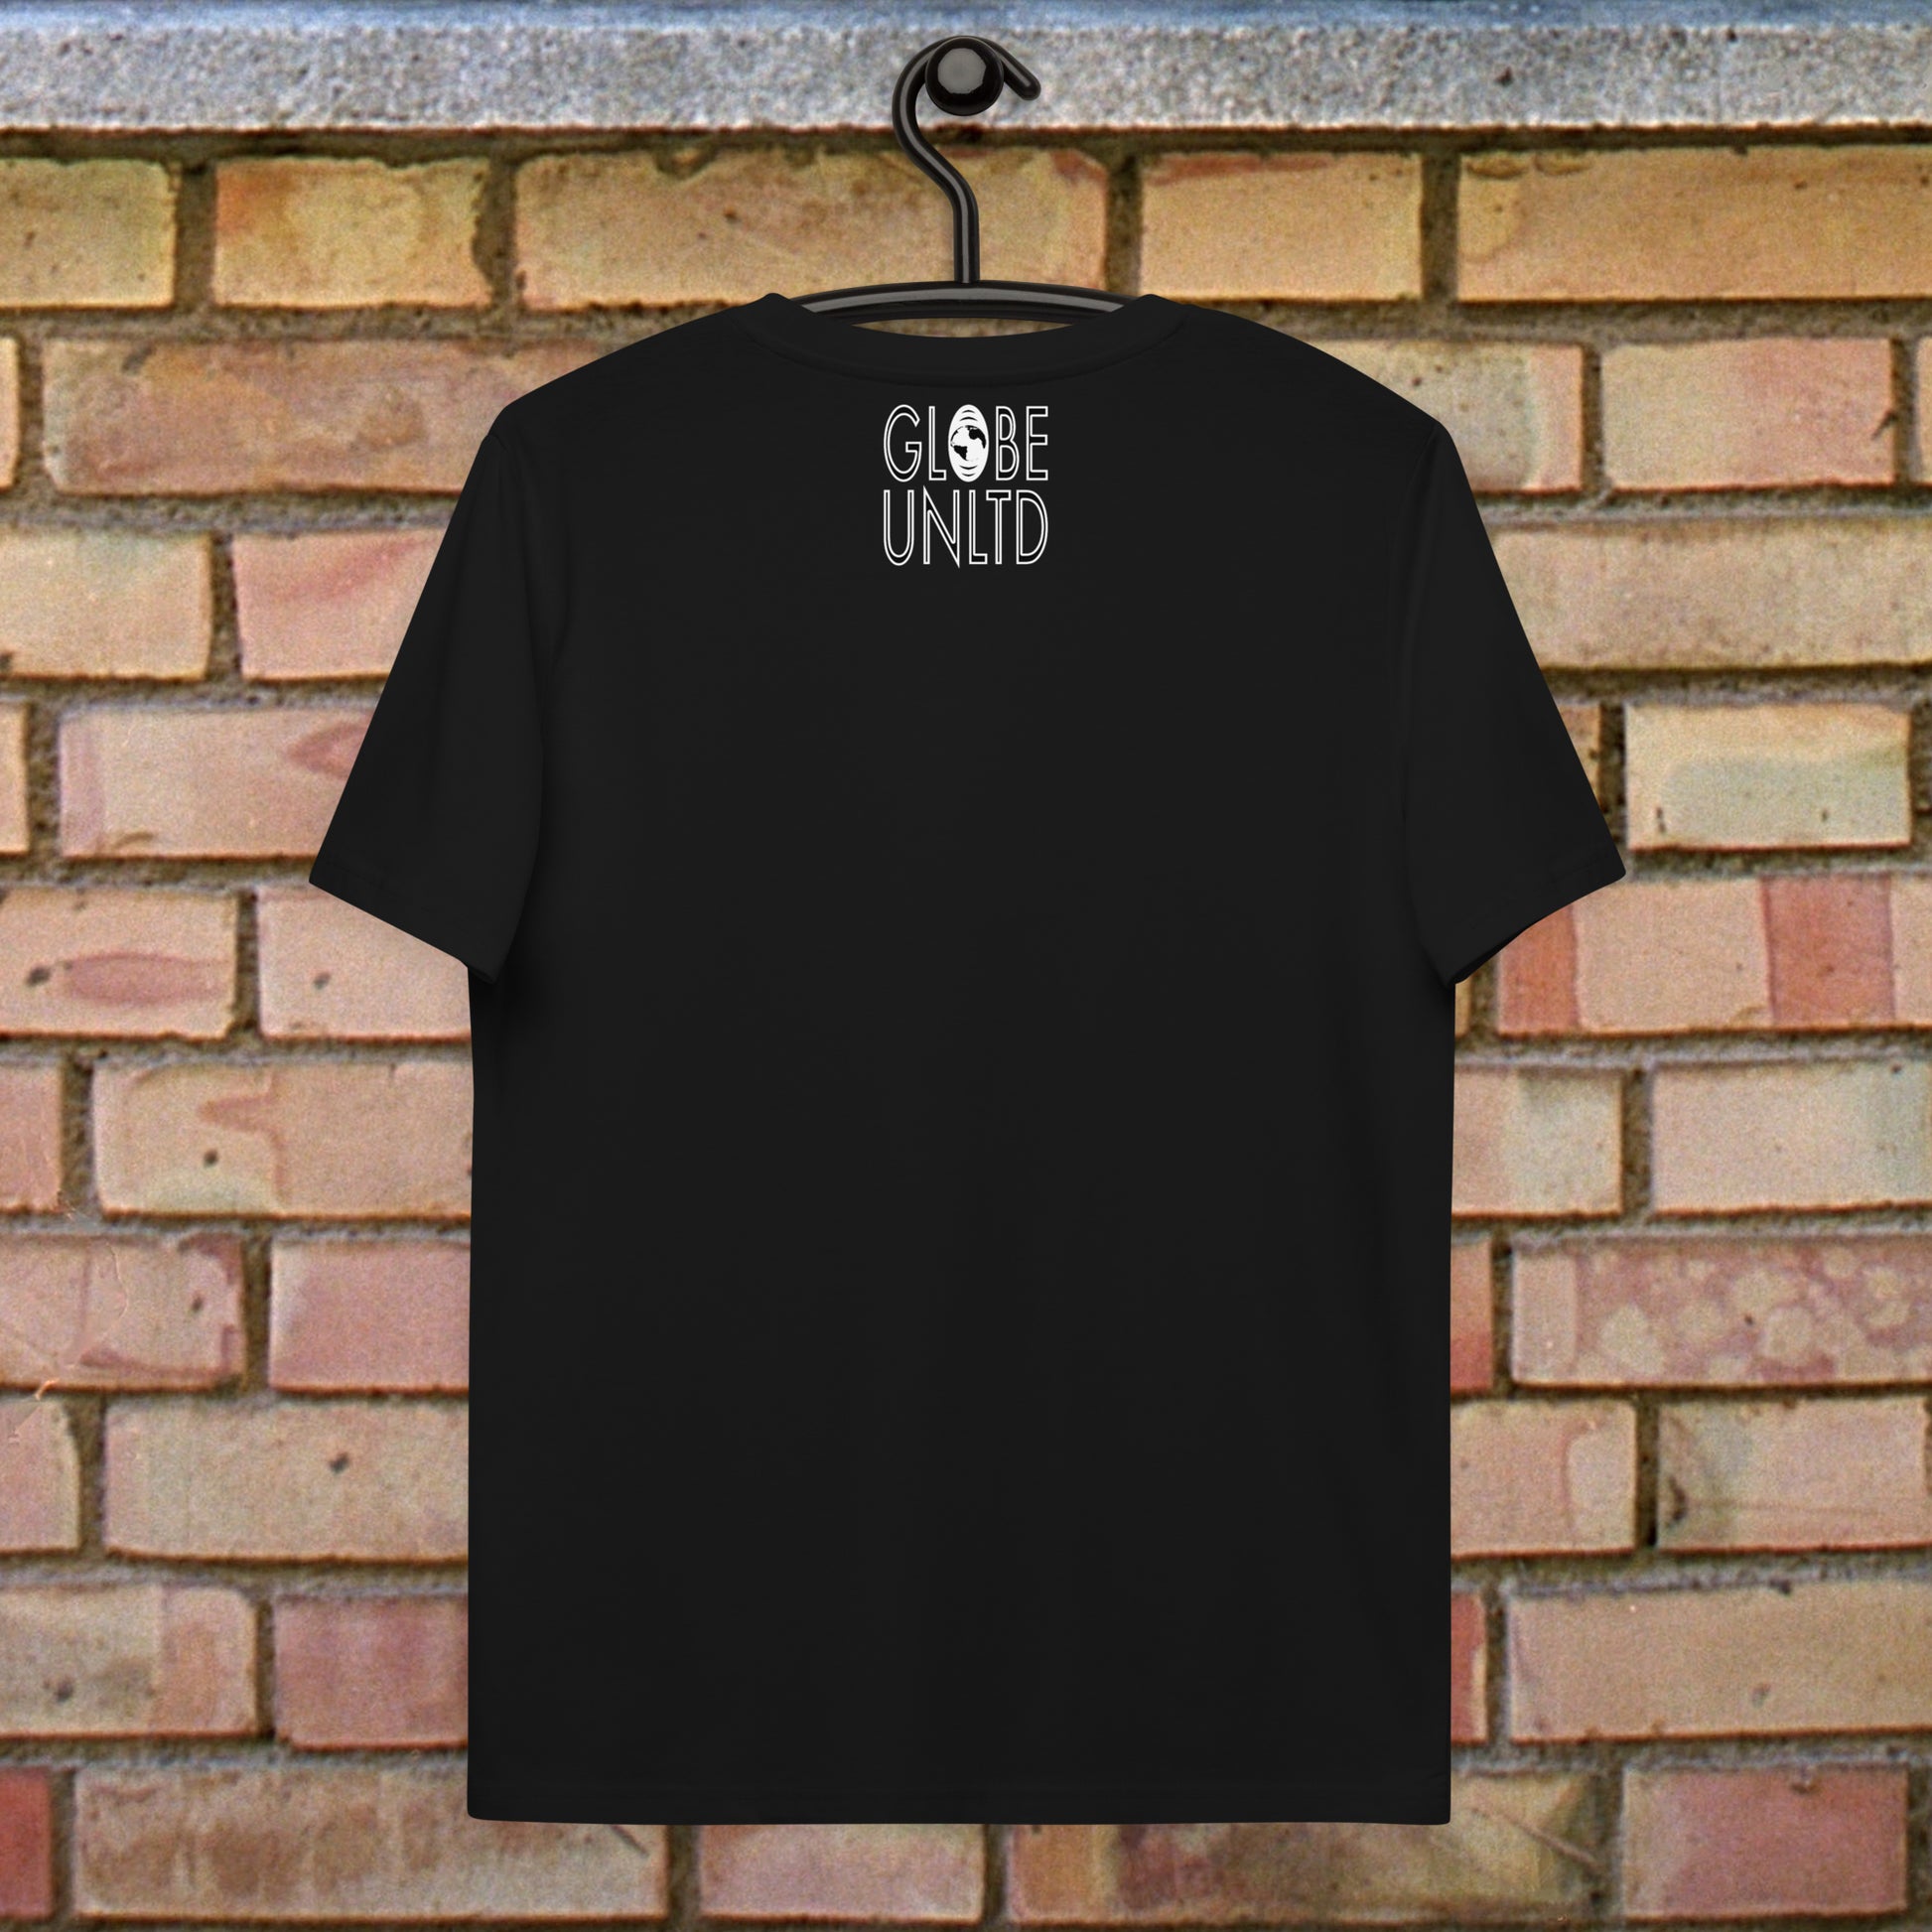 Globe UNLTD Barcelona BCN Boarding Card 100% Organic Cotton T-Shirt in Black. Back Facing on Clothes Hanger.